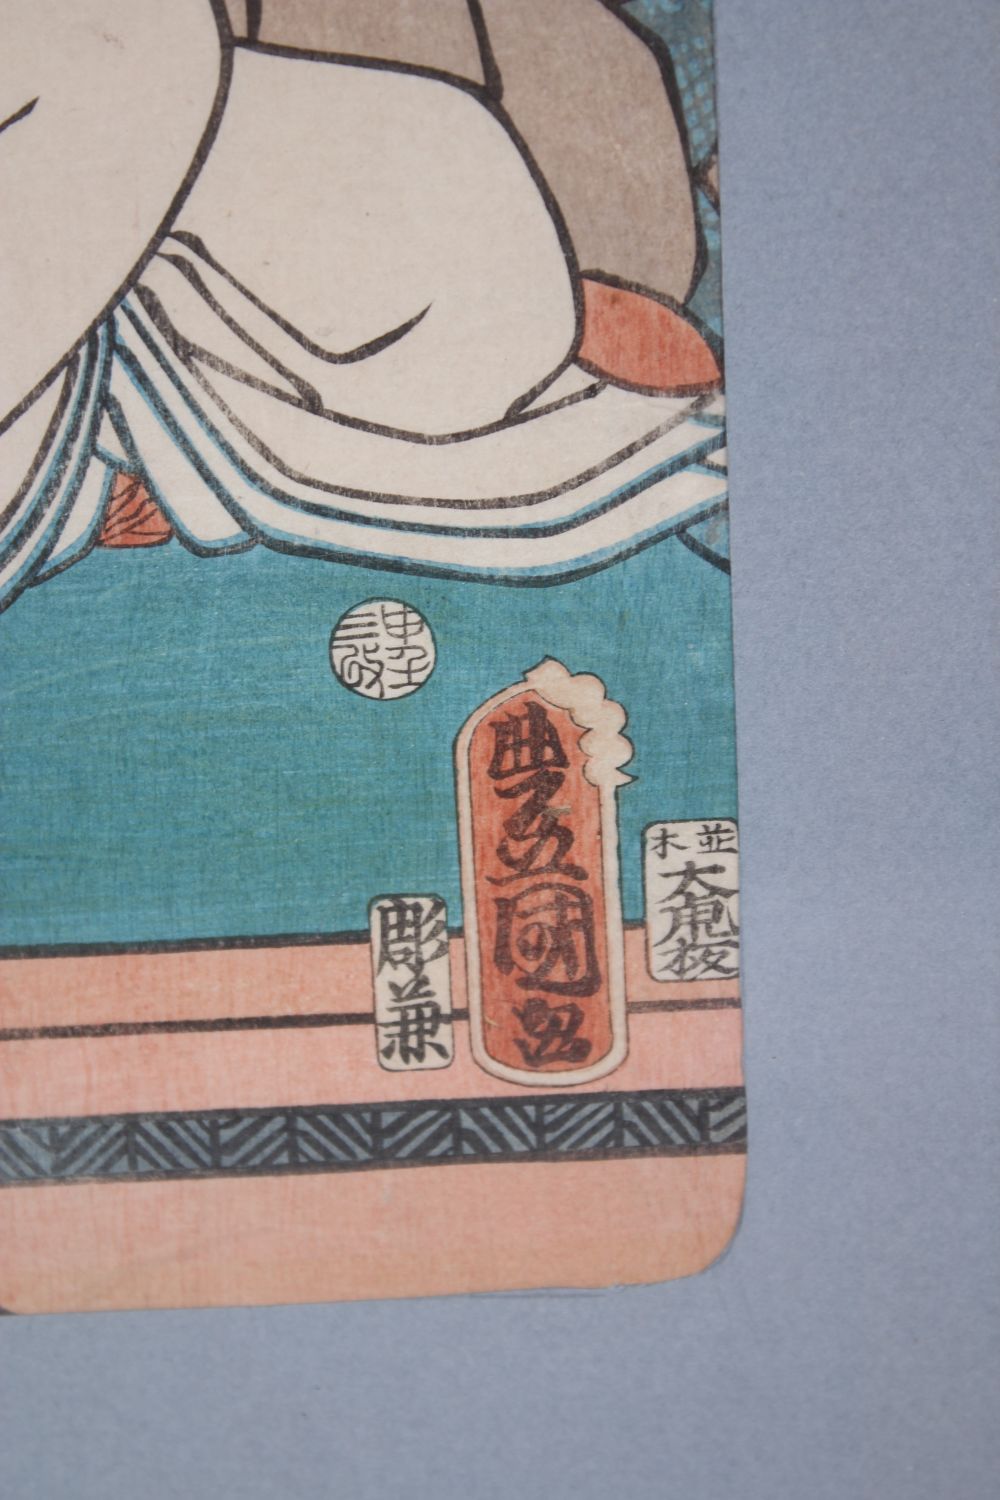 A GOOD JAPANESE EDO / MEIJI PERIOD UKIYO-E / WOOD BLOCK PRINT BY KUNISADA, the print of four - Image 5 of 5